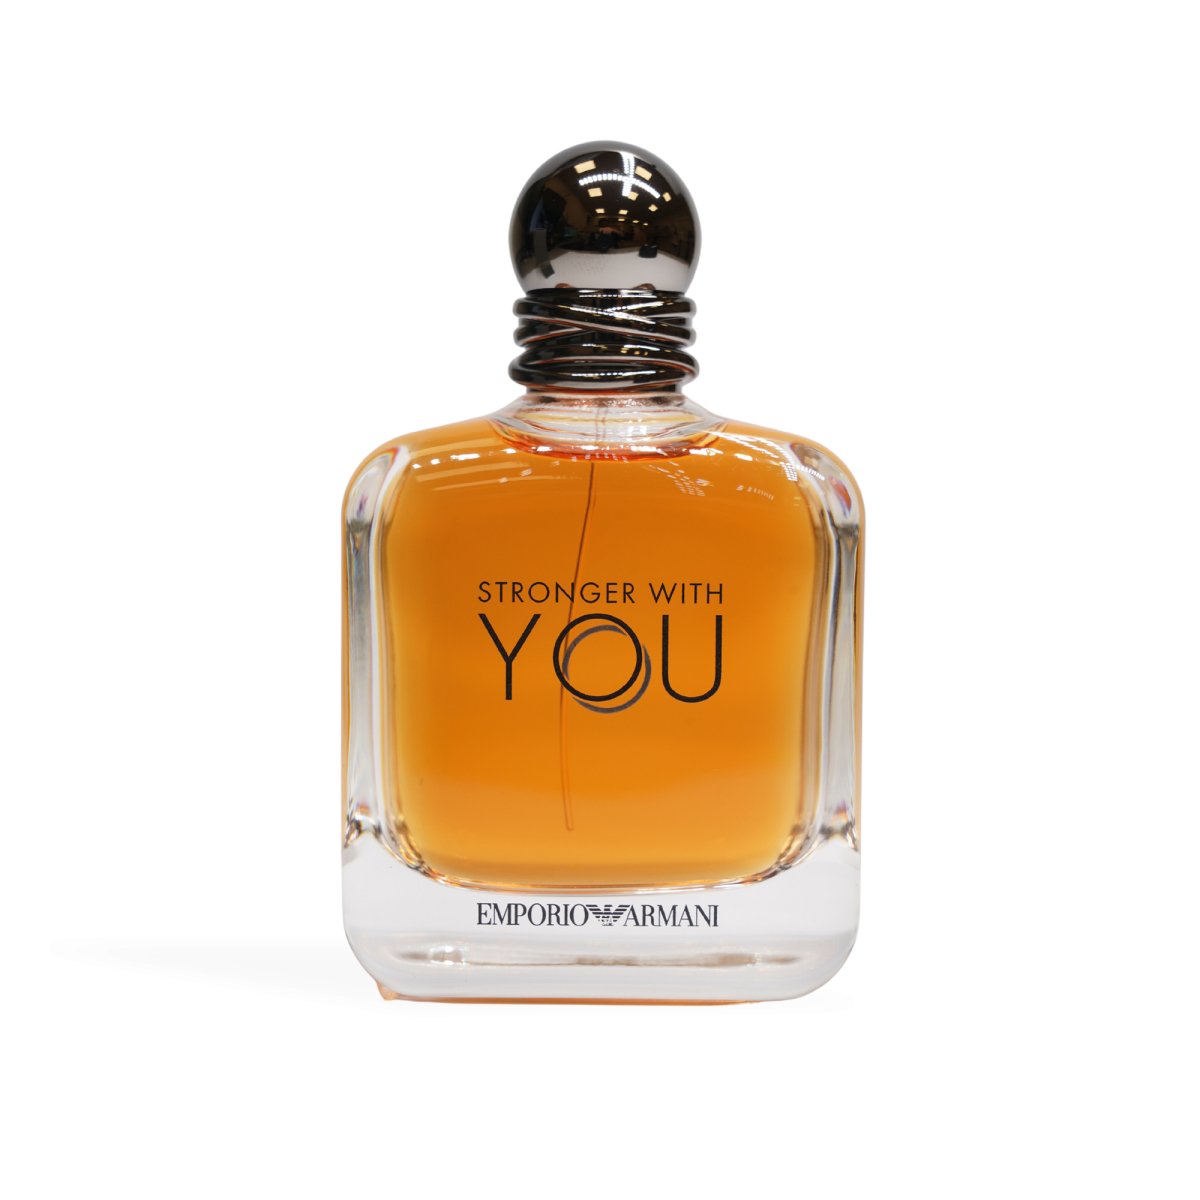 Stronger with You by Emporio Armani Eau De Toilette Spray 3.4 oz (100 ml) - Bottle Perfume Headquarters - Giorgio Armani - Fragrance